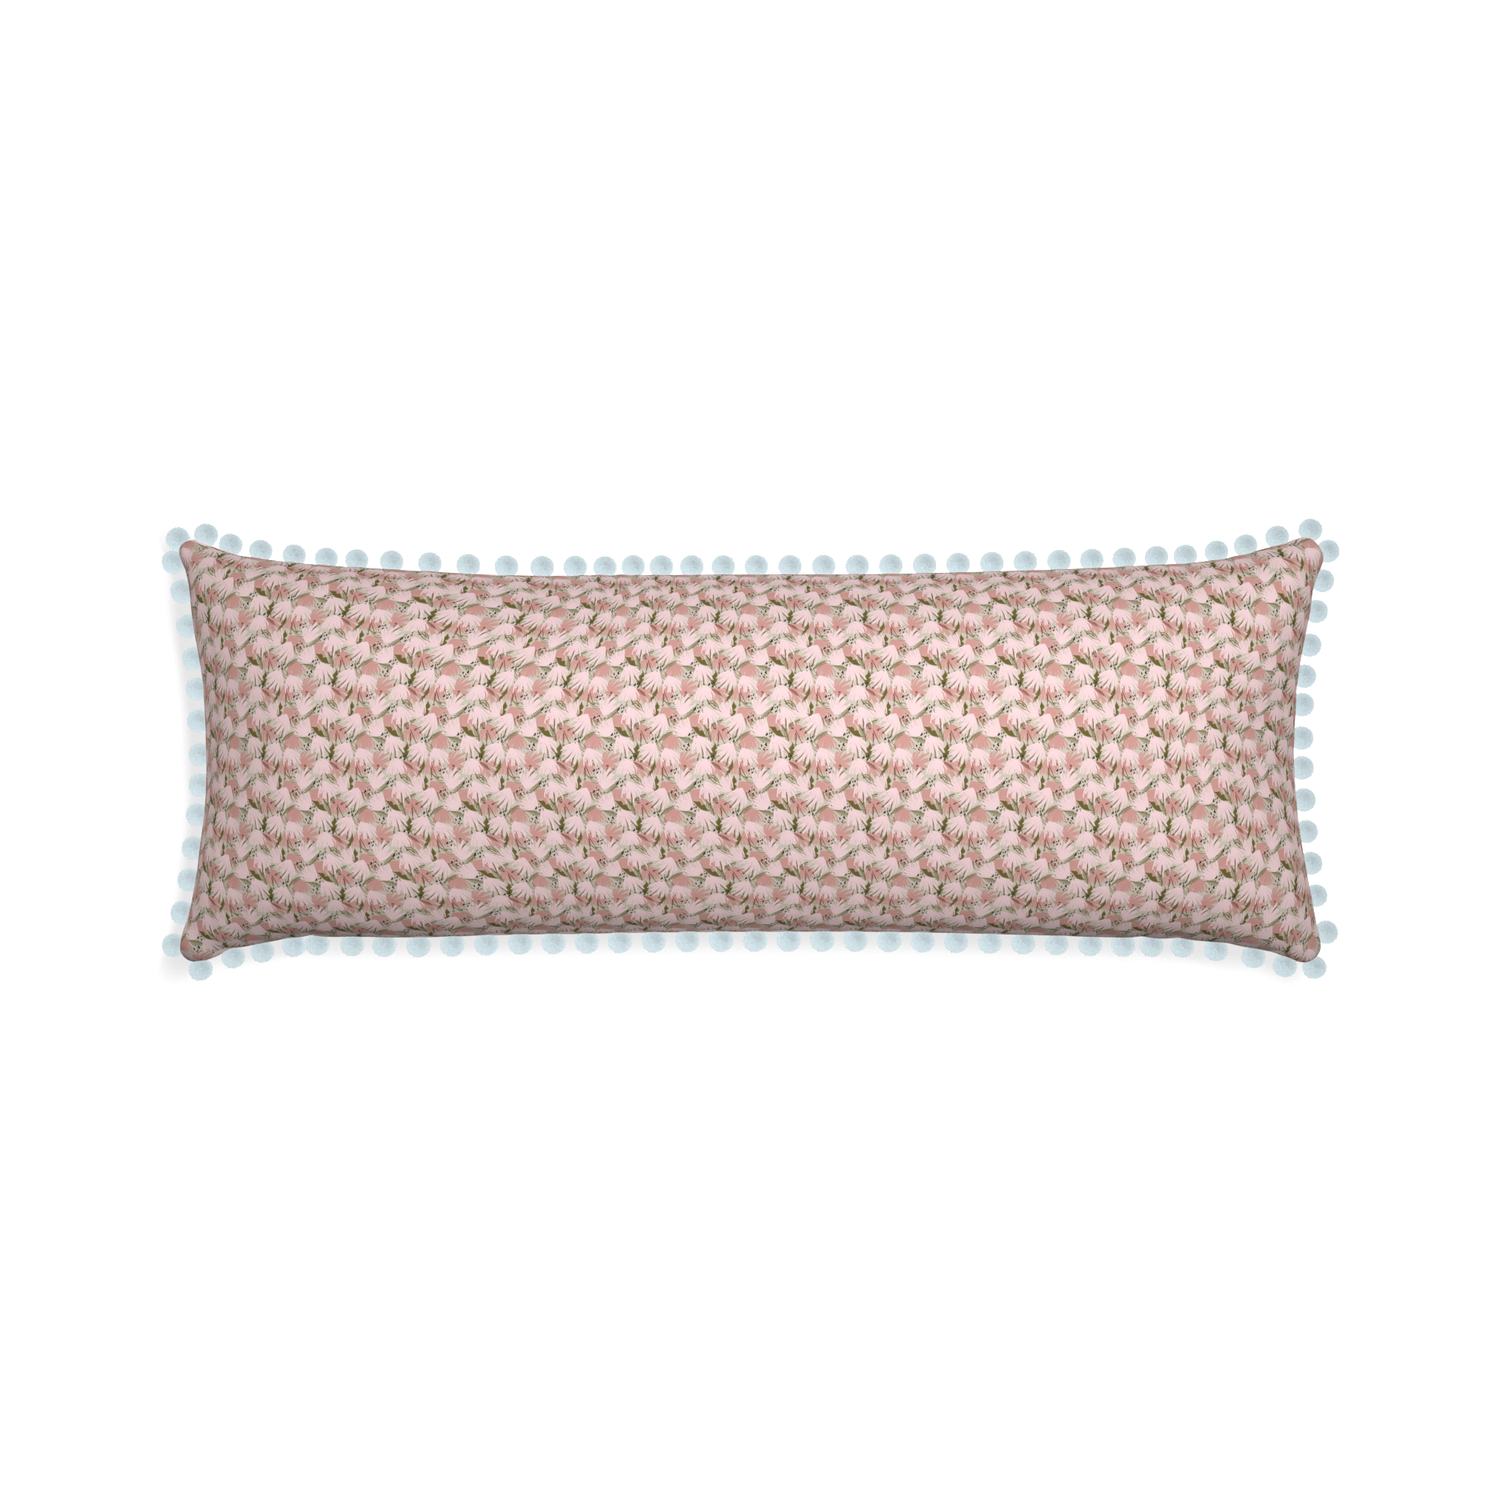 Xl-lumbar eden pink custom pillow with powder pom pom on white background